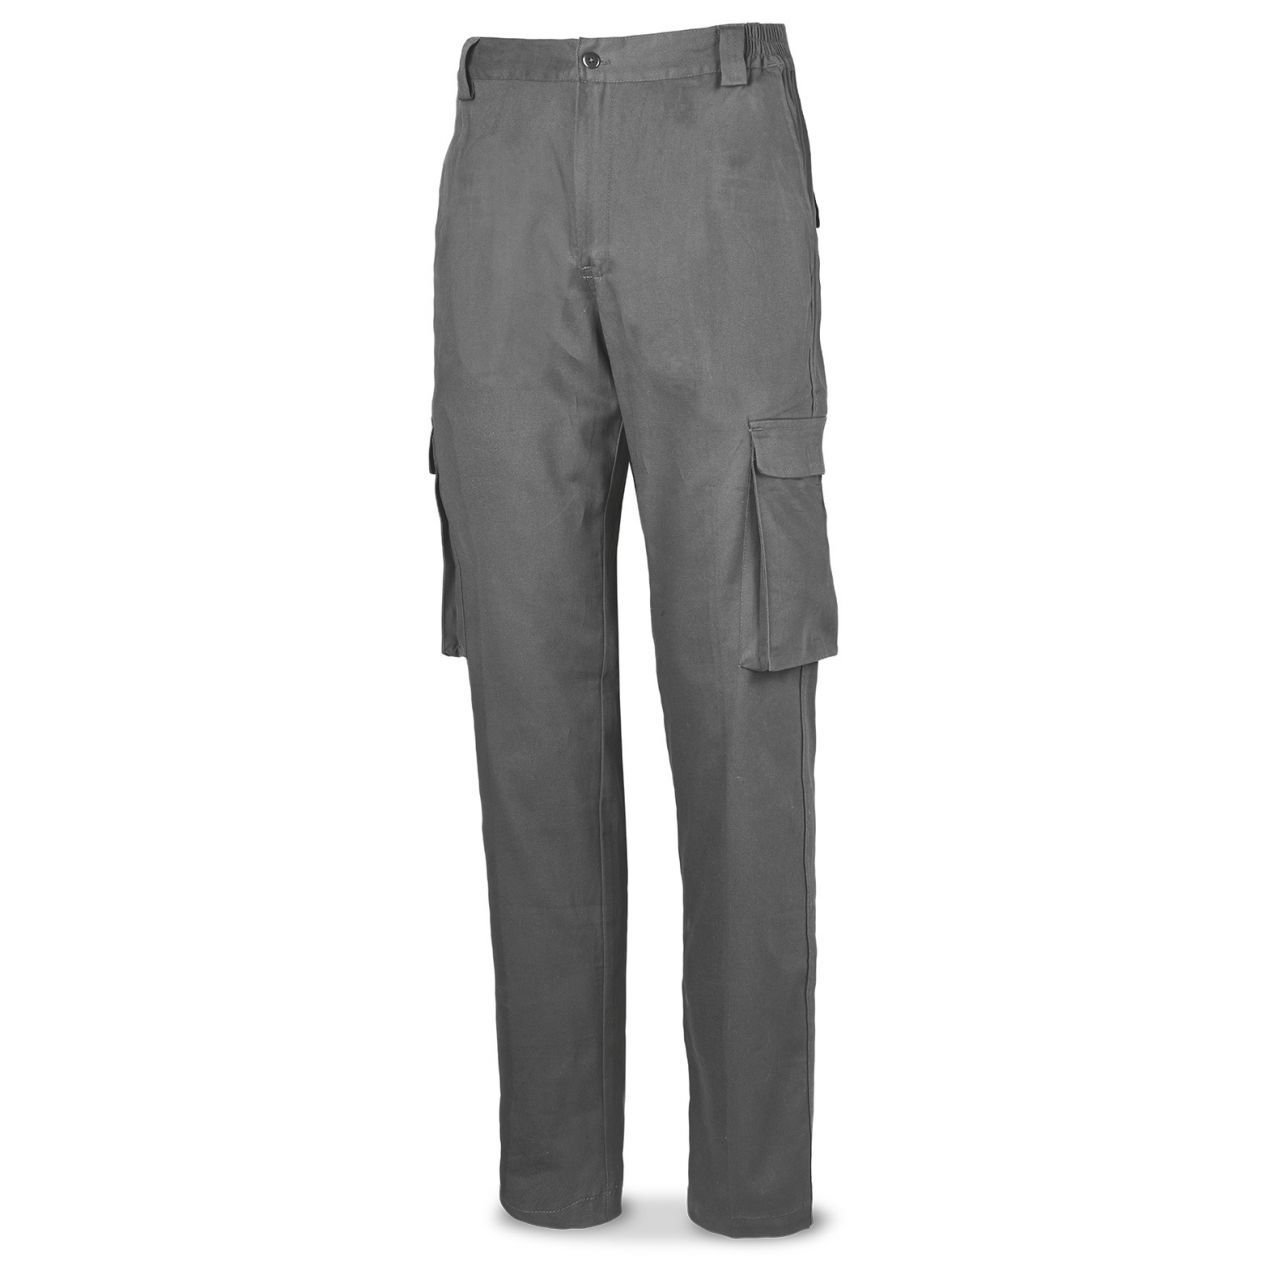 Pantalón STRETCH básico. Color gris 62